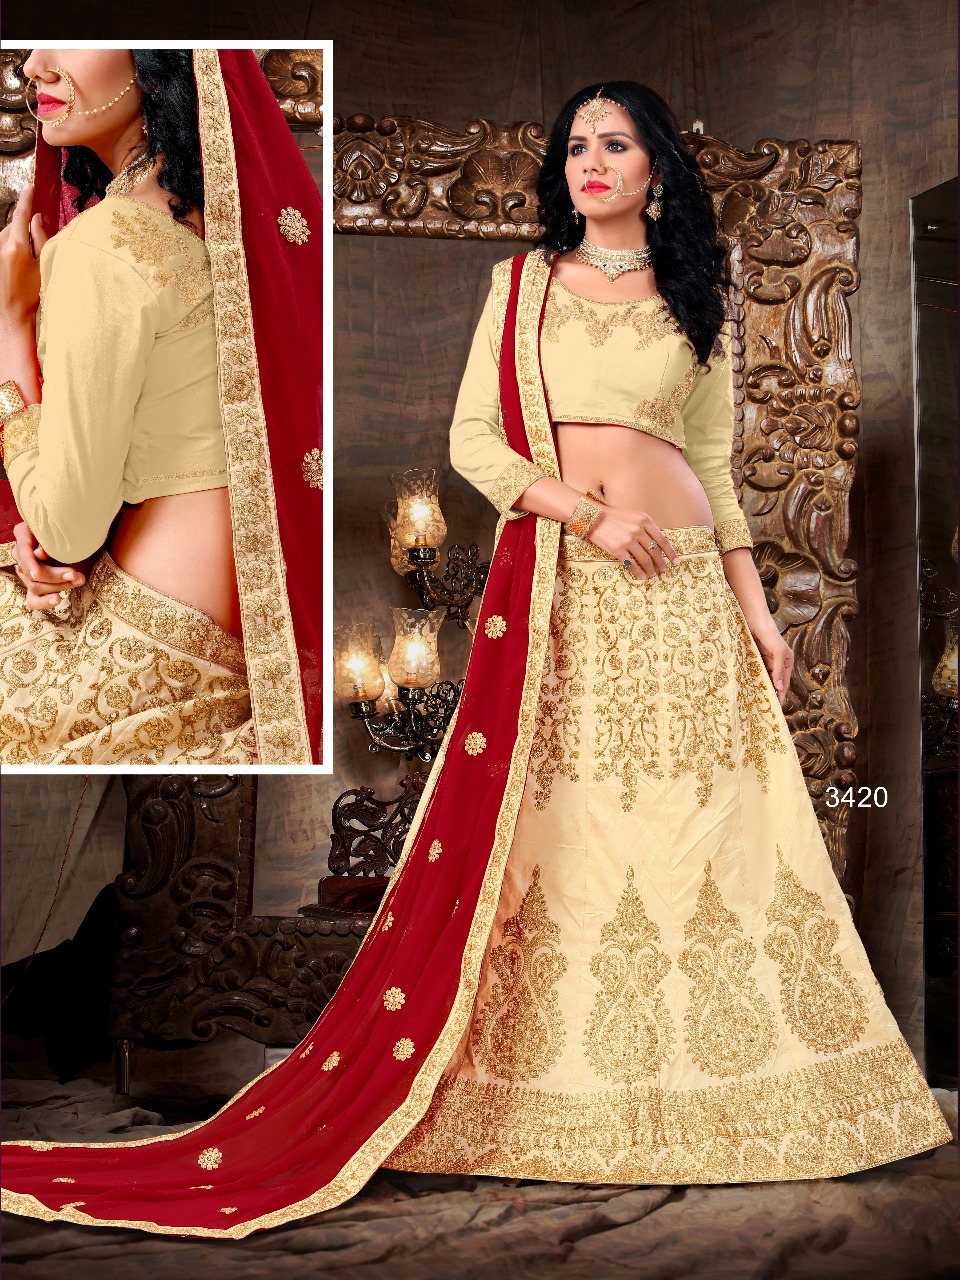 Majestic by sanskar sarees brings indidan wedding style lehenga